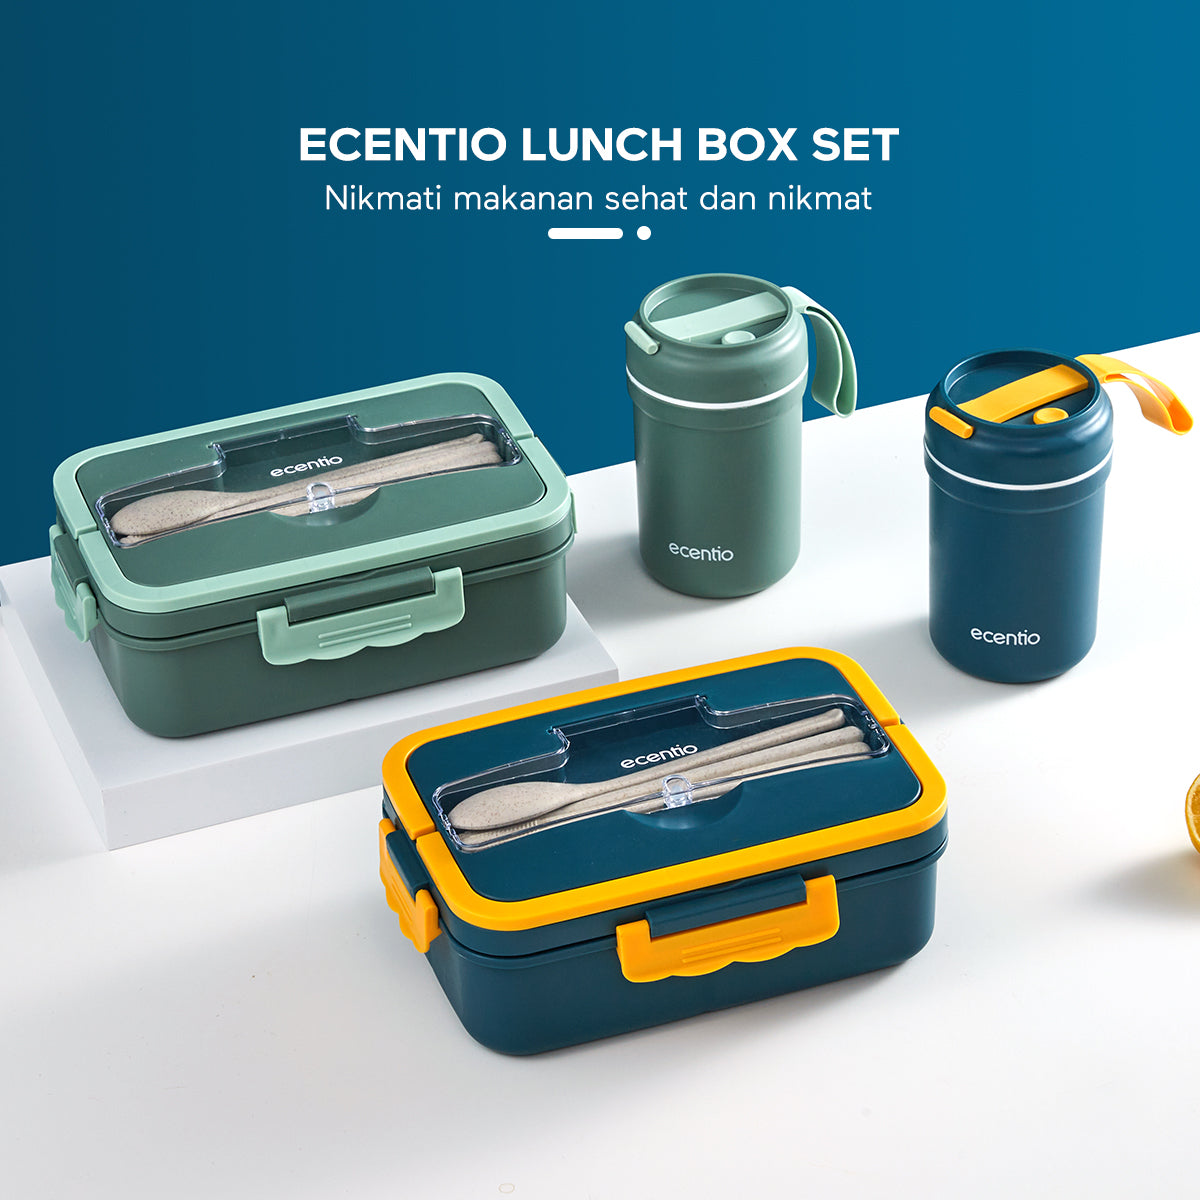 ecentio kotak makan set Lunch box